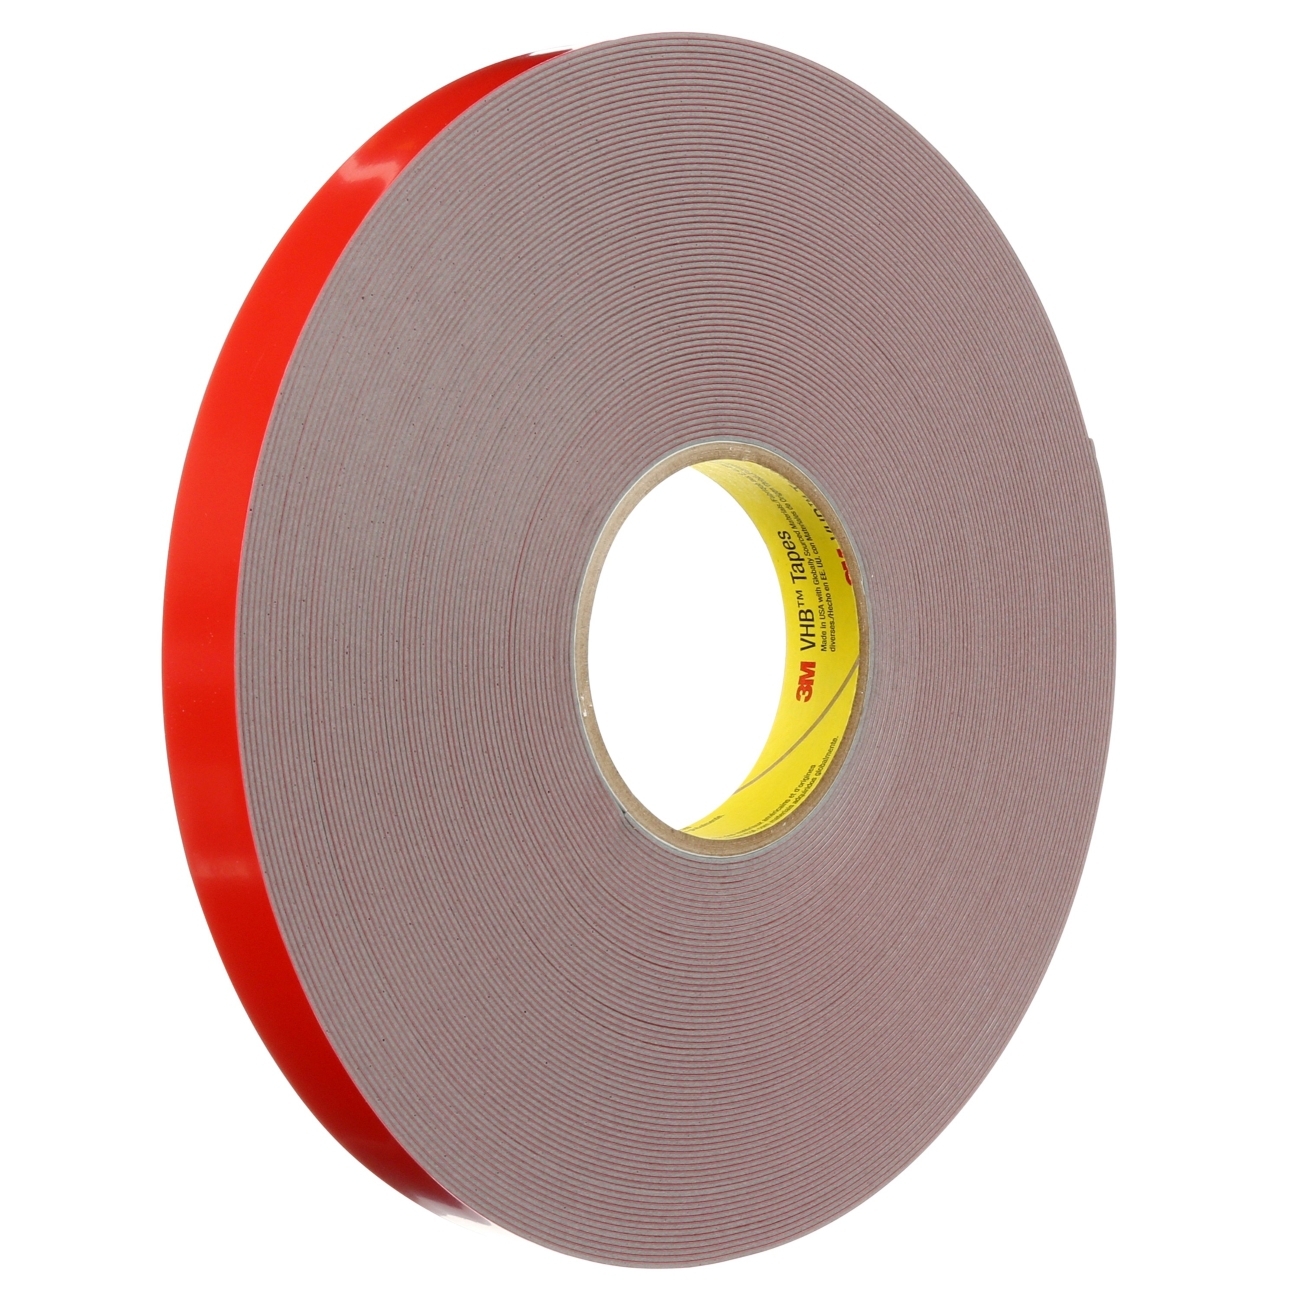 3M VHB adhesive tape 4991F, gray, 6 mm x 16.5 m, 2.3 mm